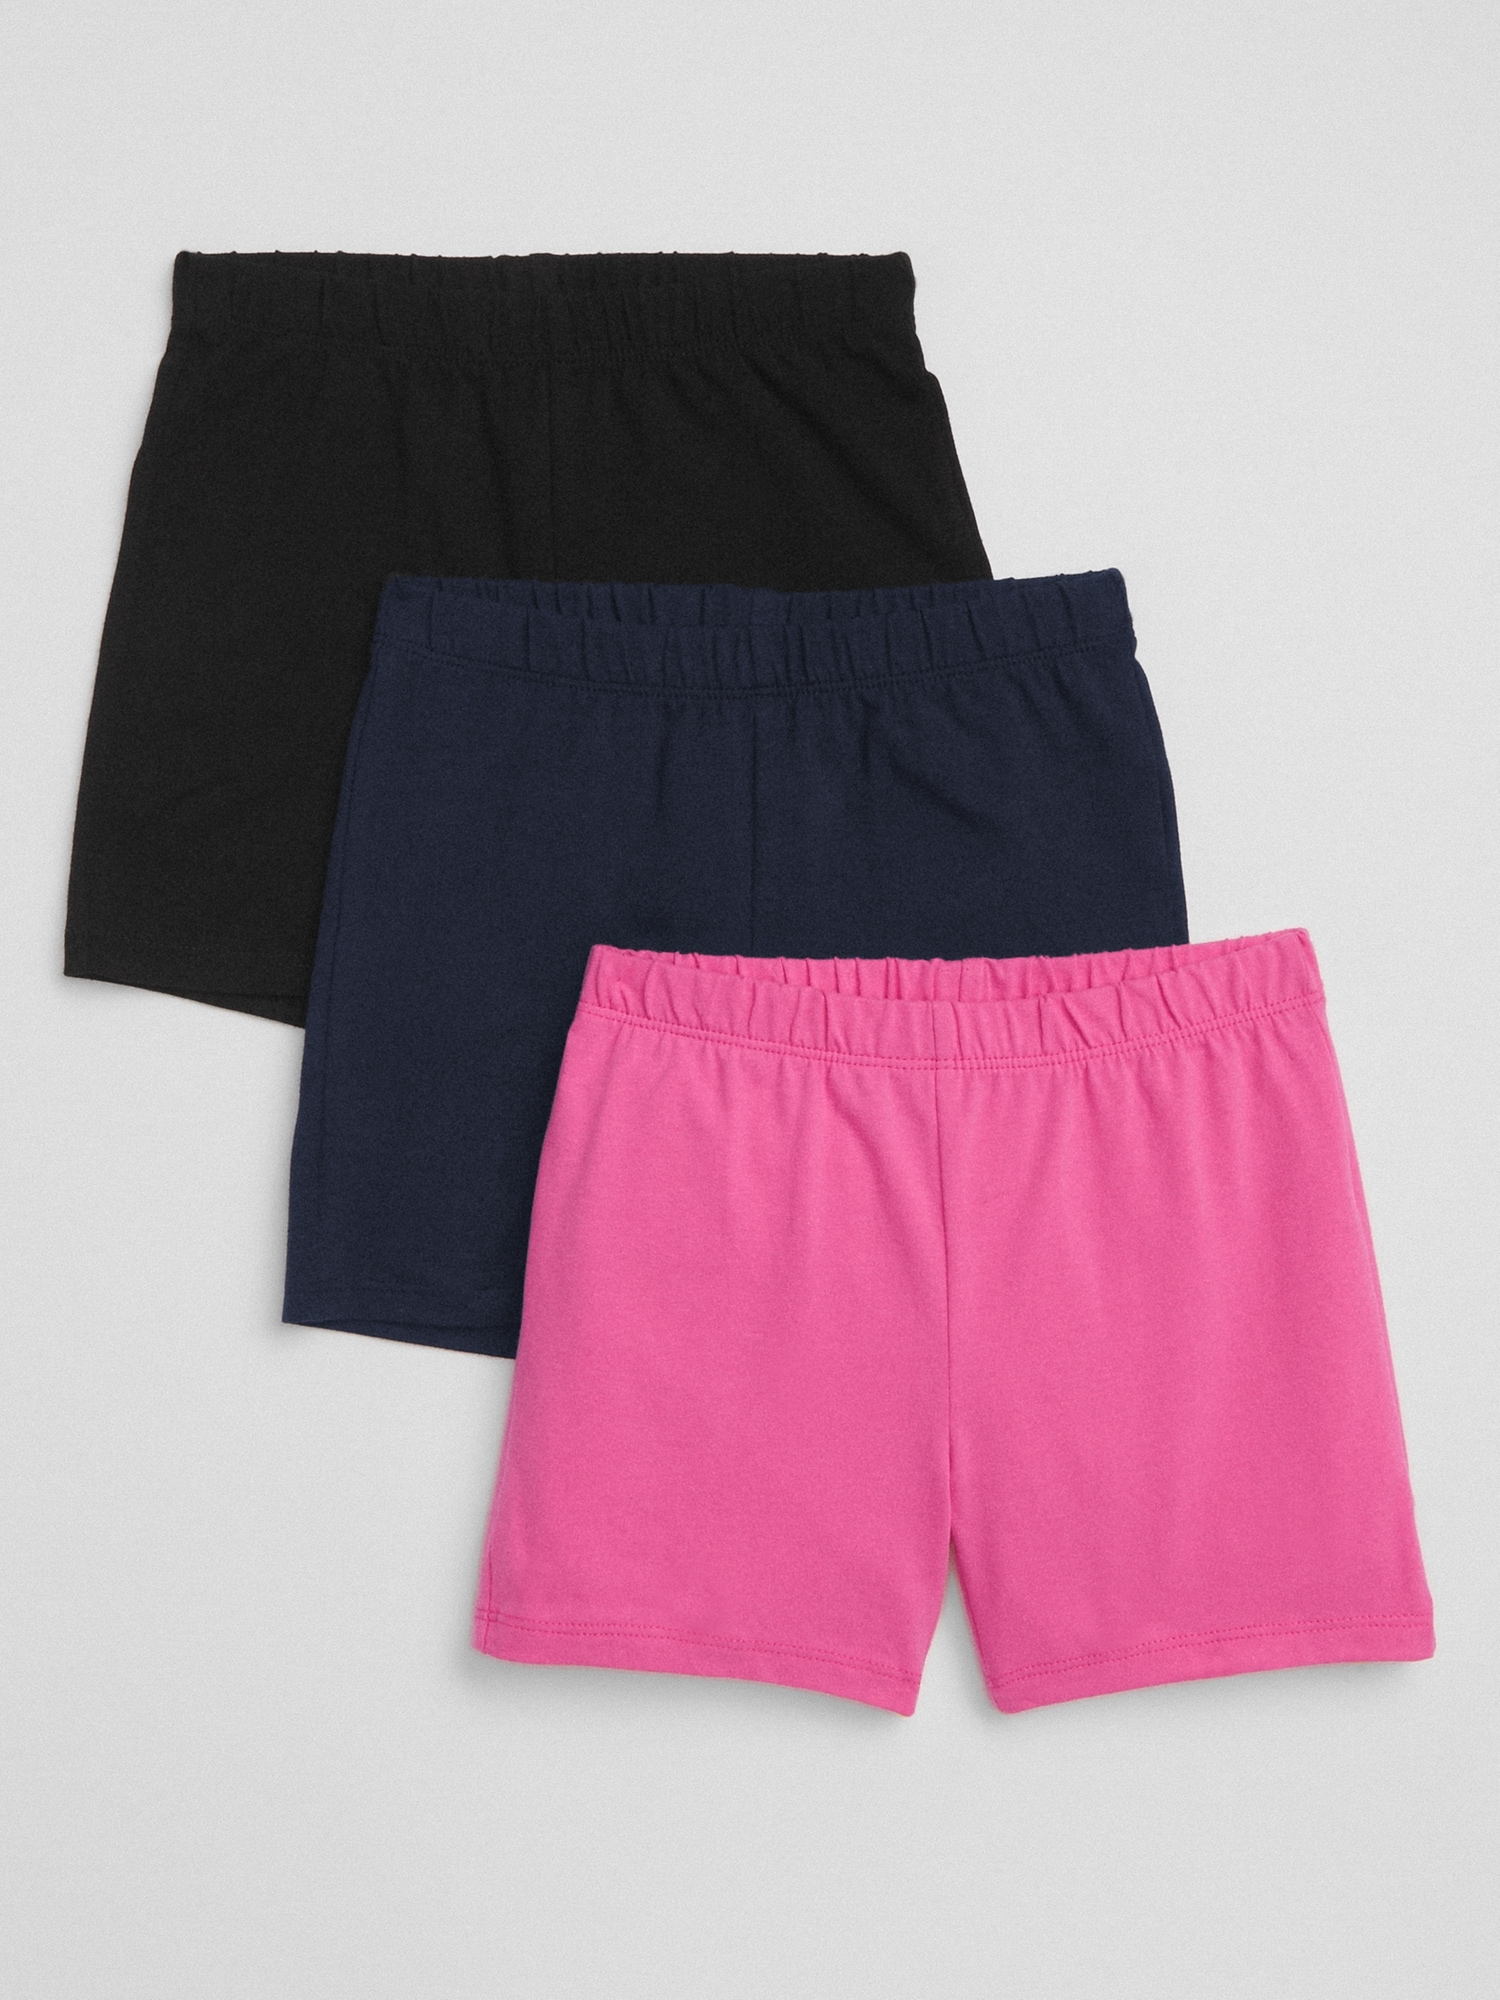 Girls Mix And Match Knit Cartwheel Shorts 6-Pack